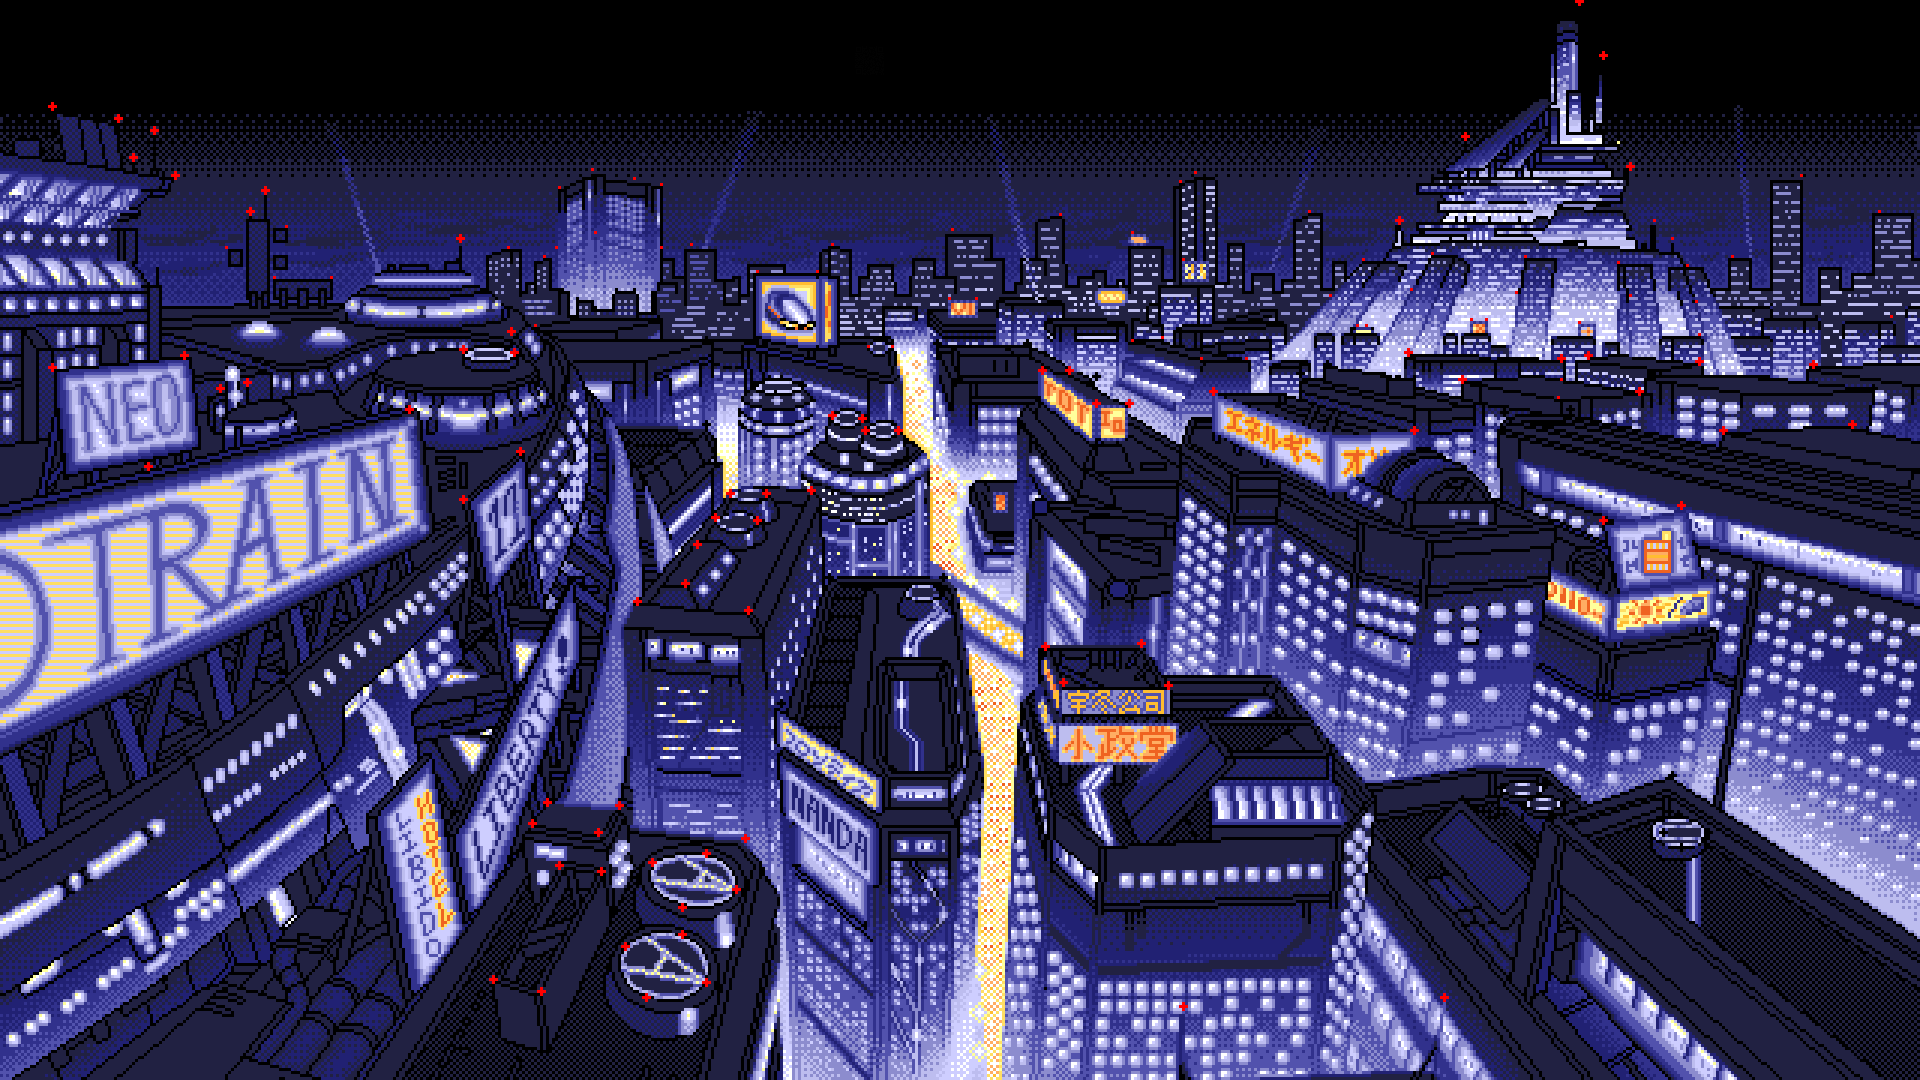 General 1920x1080 PC-98 pixel art dark background cityscape digital art artwork city